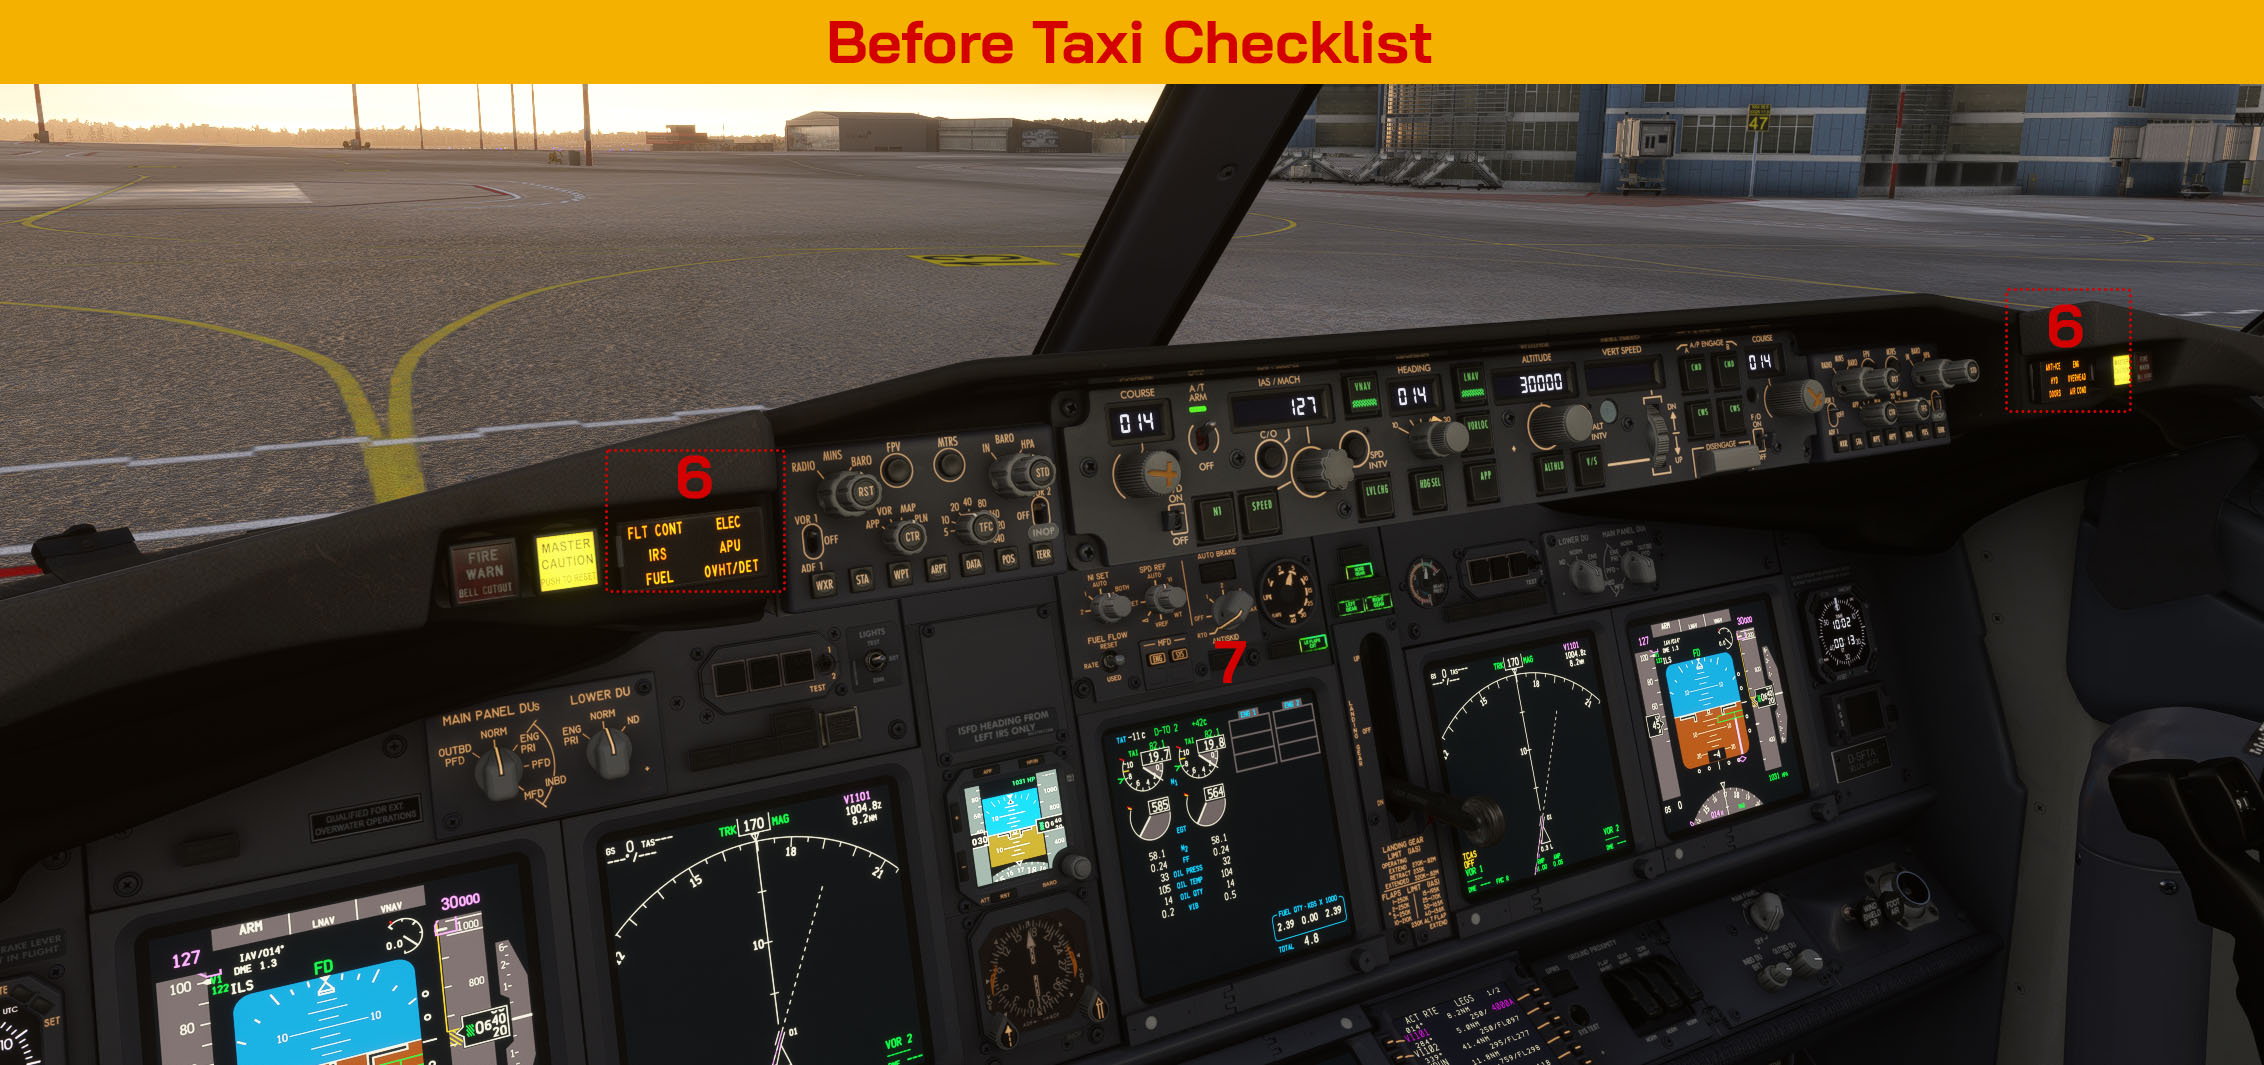 Taxi_Checklist_2